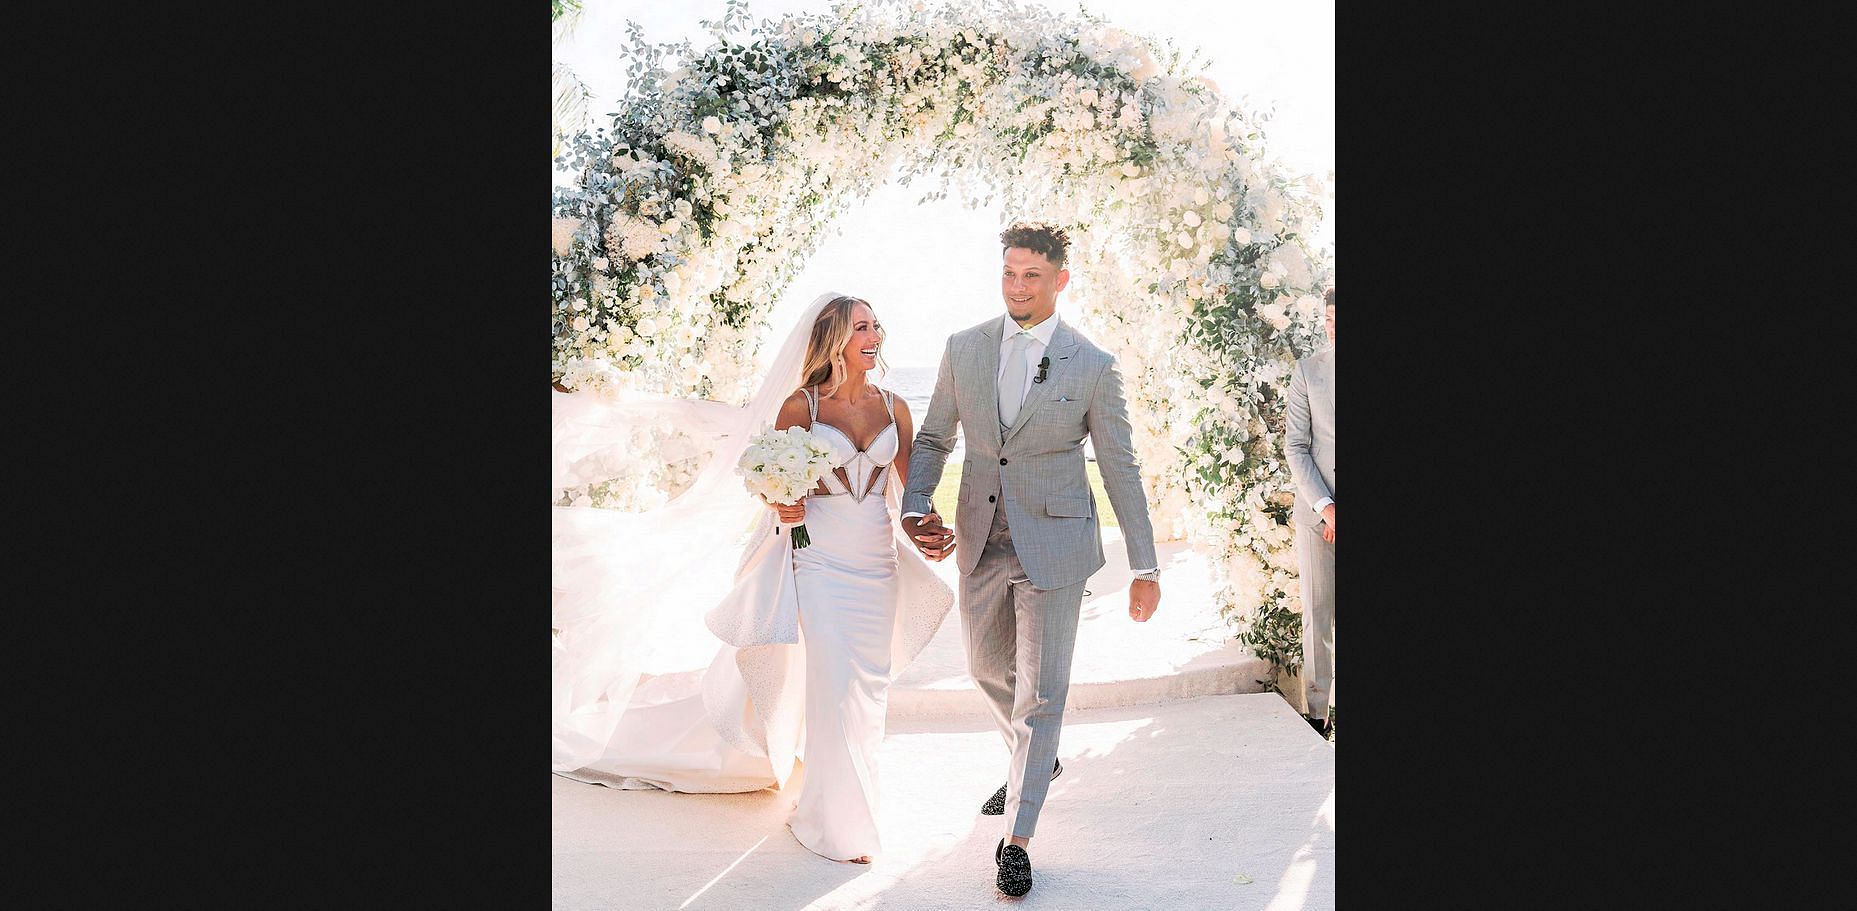 Patrick Mahomes and Brittany Matthews wedding | Instagram